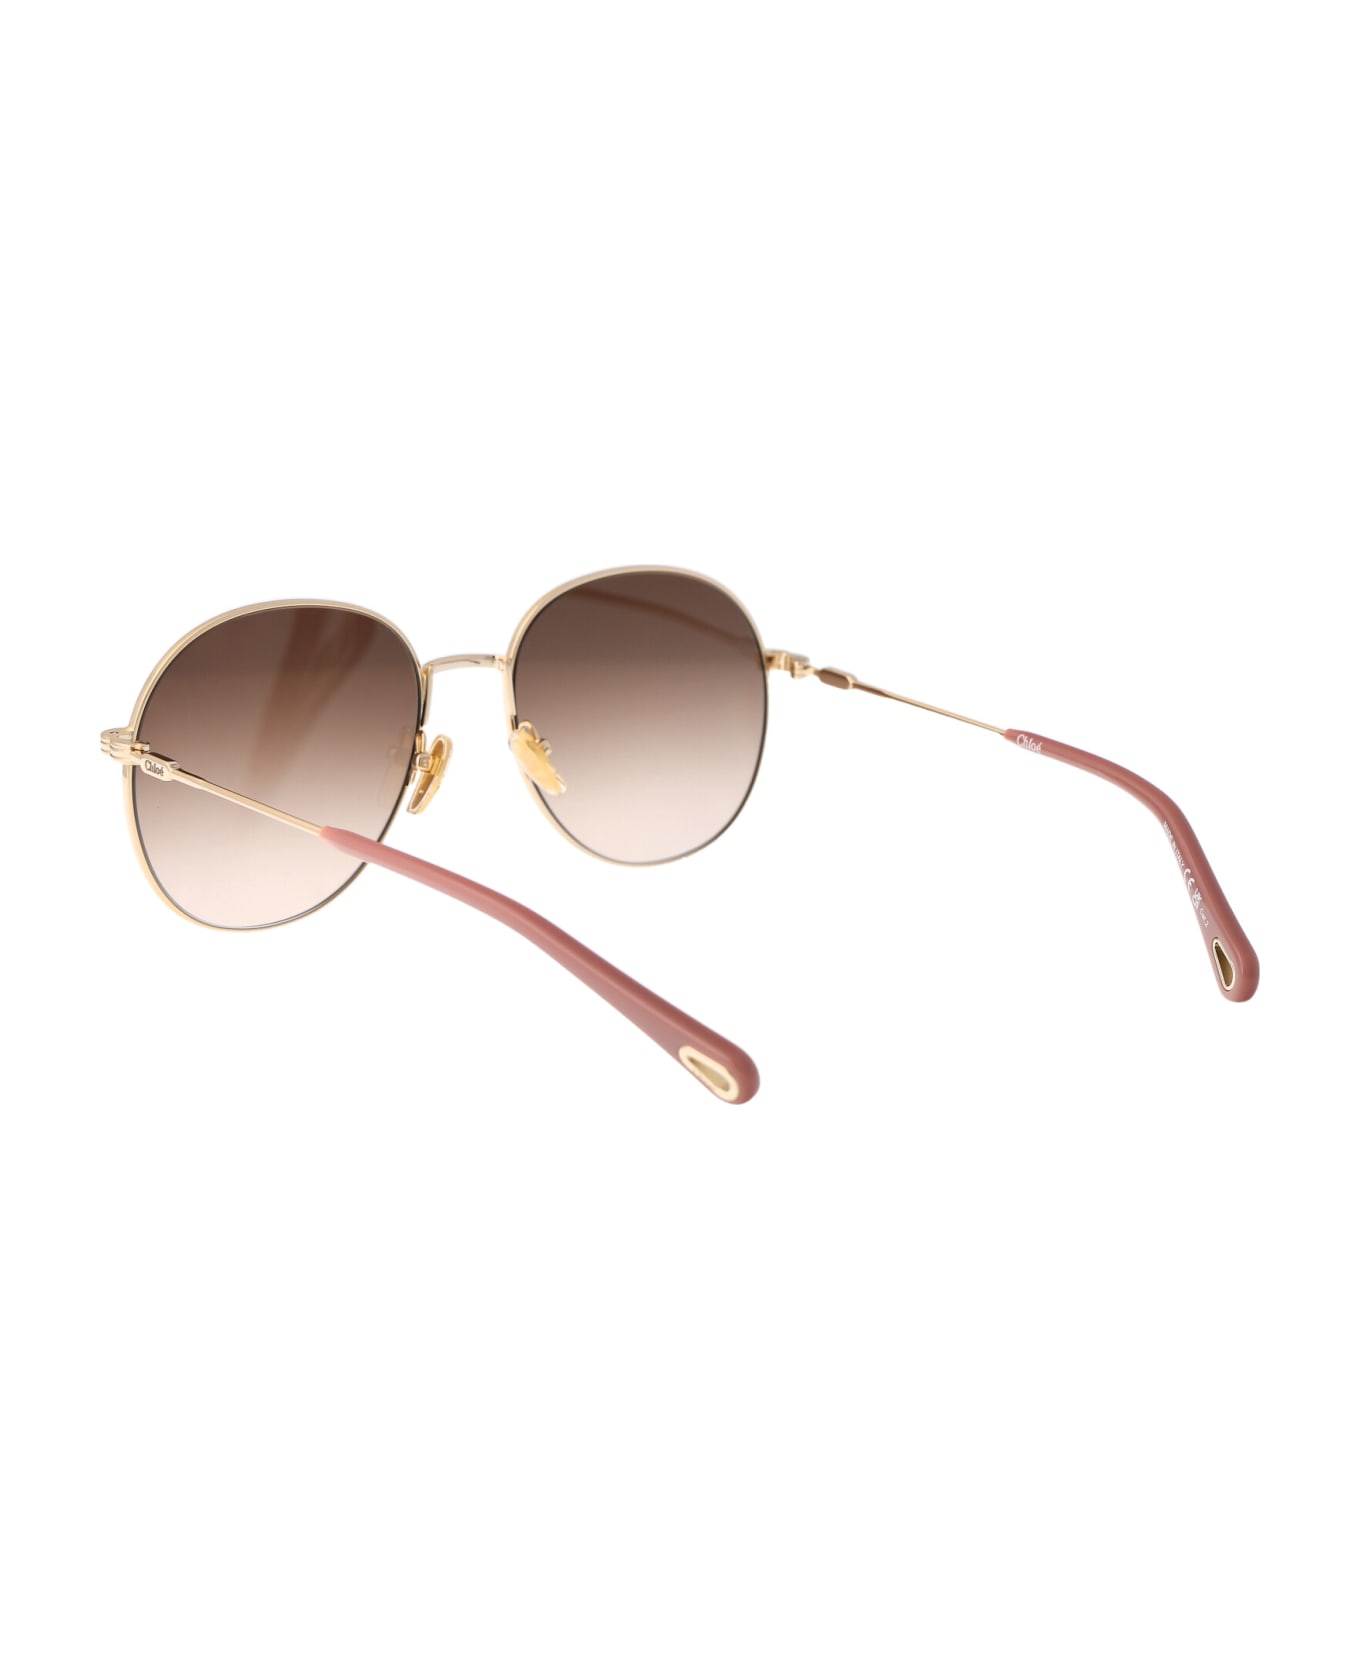 Chloé Eyewear Ch0178s Sunglasses - 002 GOLD GOLD BROWN